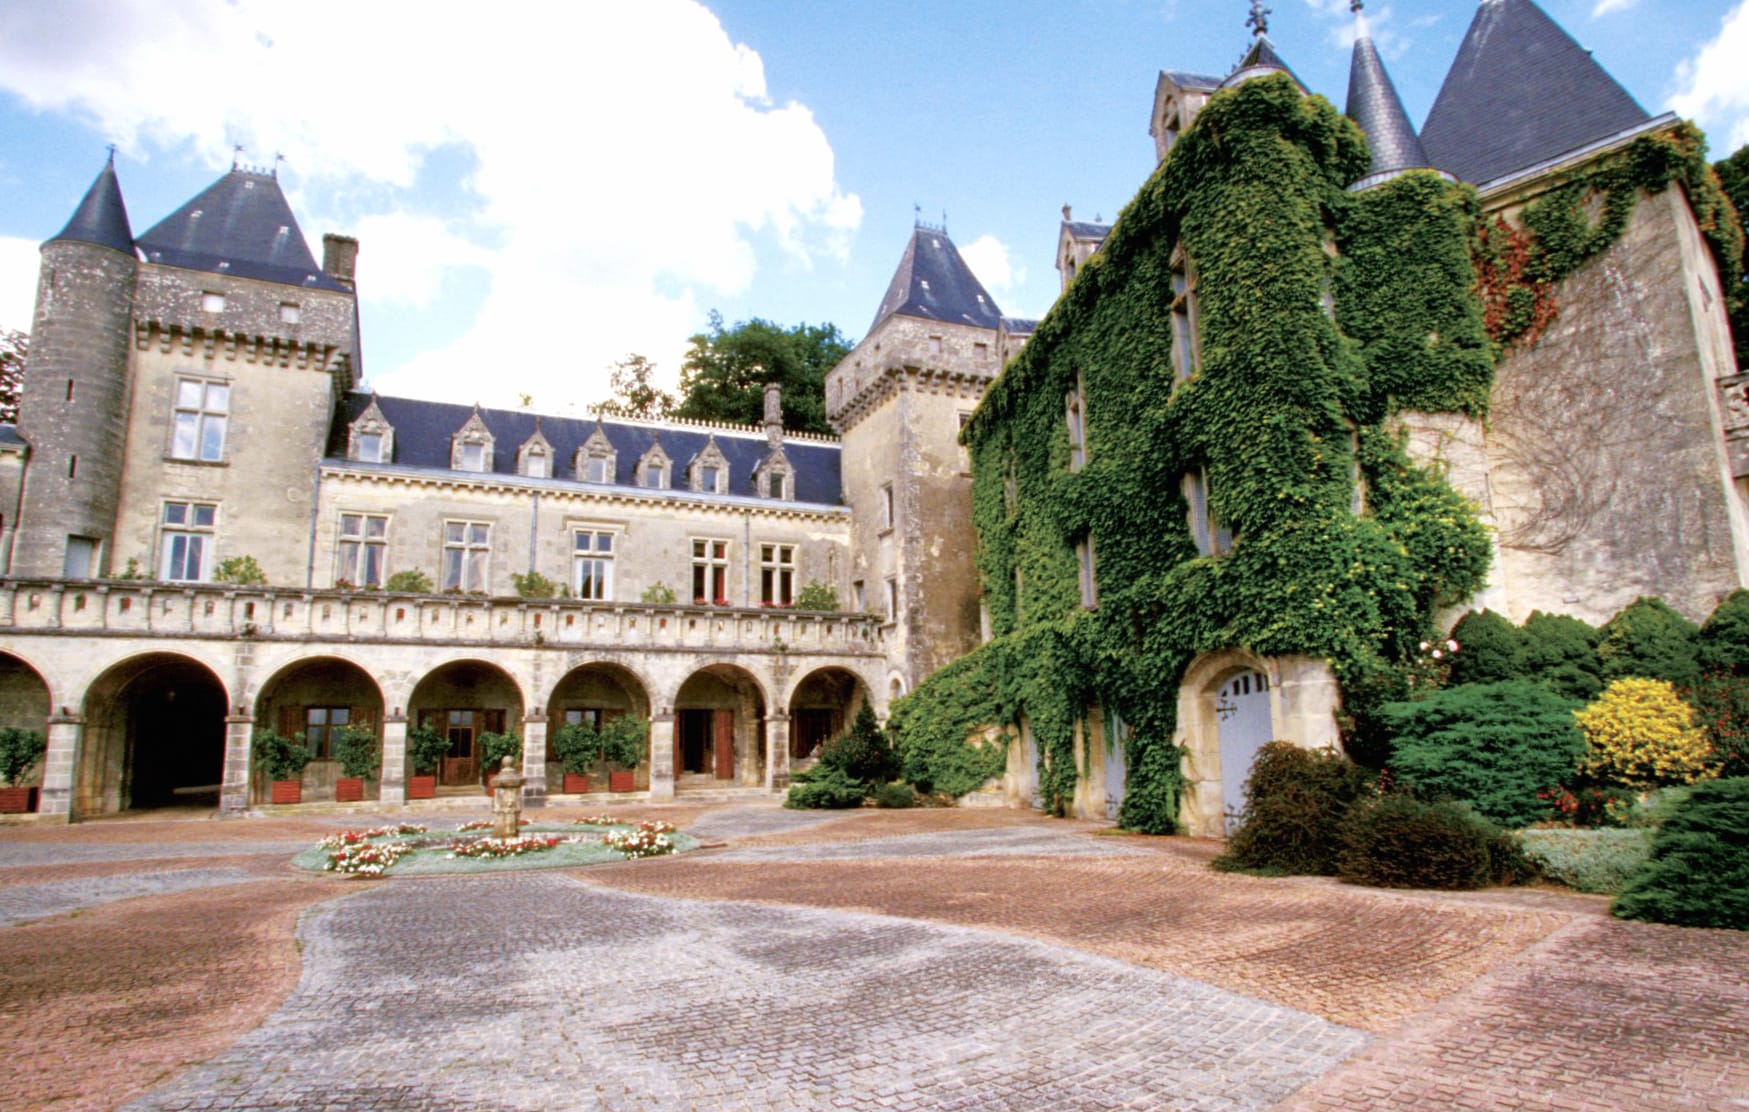 Chateau de La Riviere-Bourdet at 1600 x 1200 size wallpapers HD quality